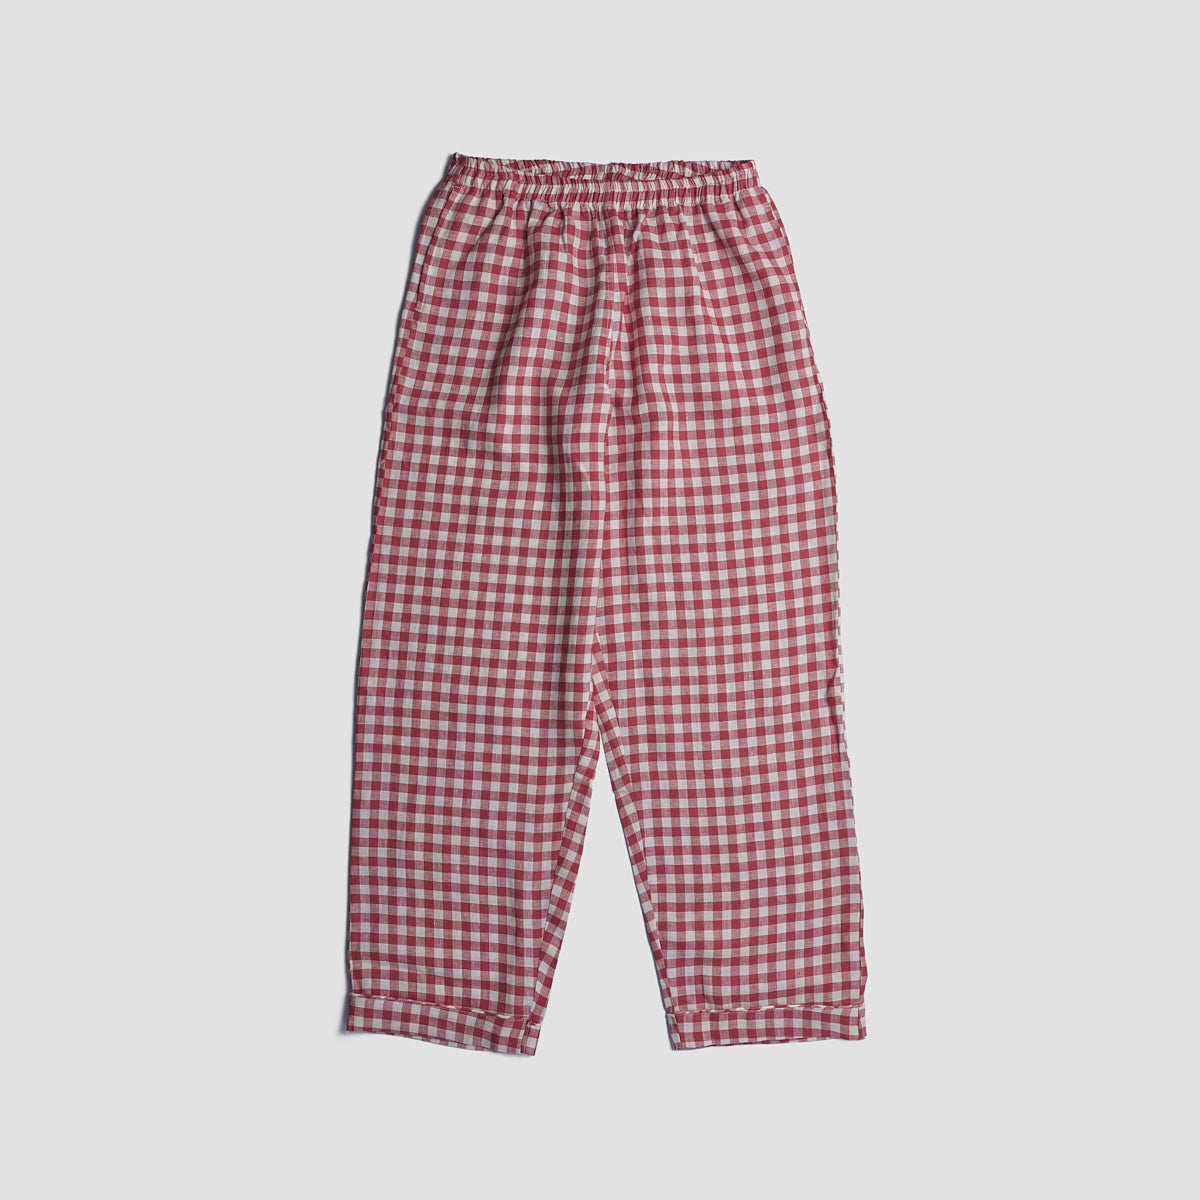 Men's Mineral Red Gingham Pajama Pants